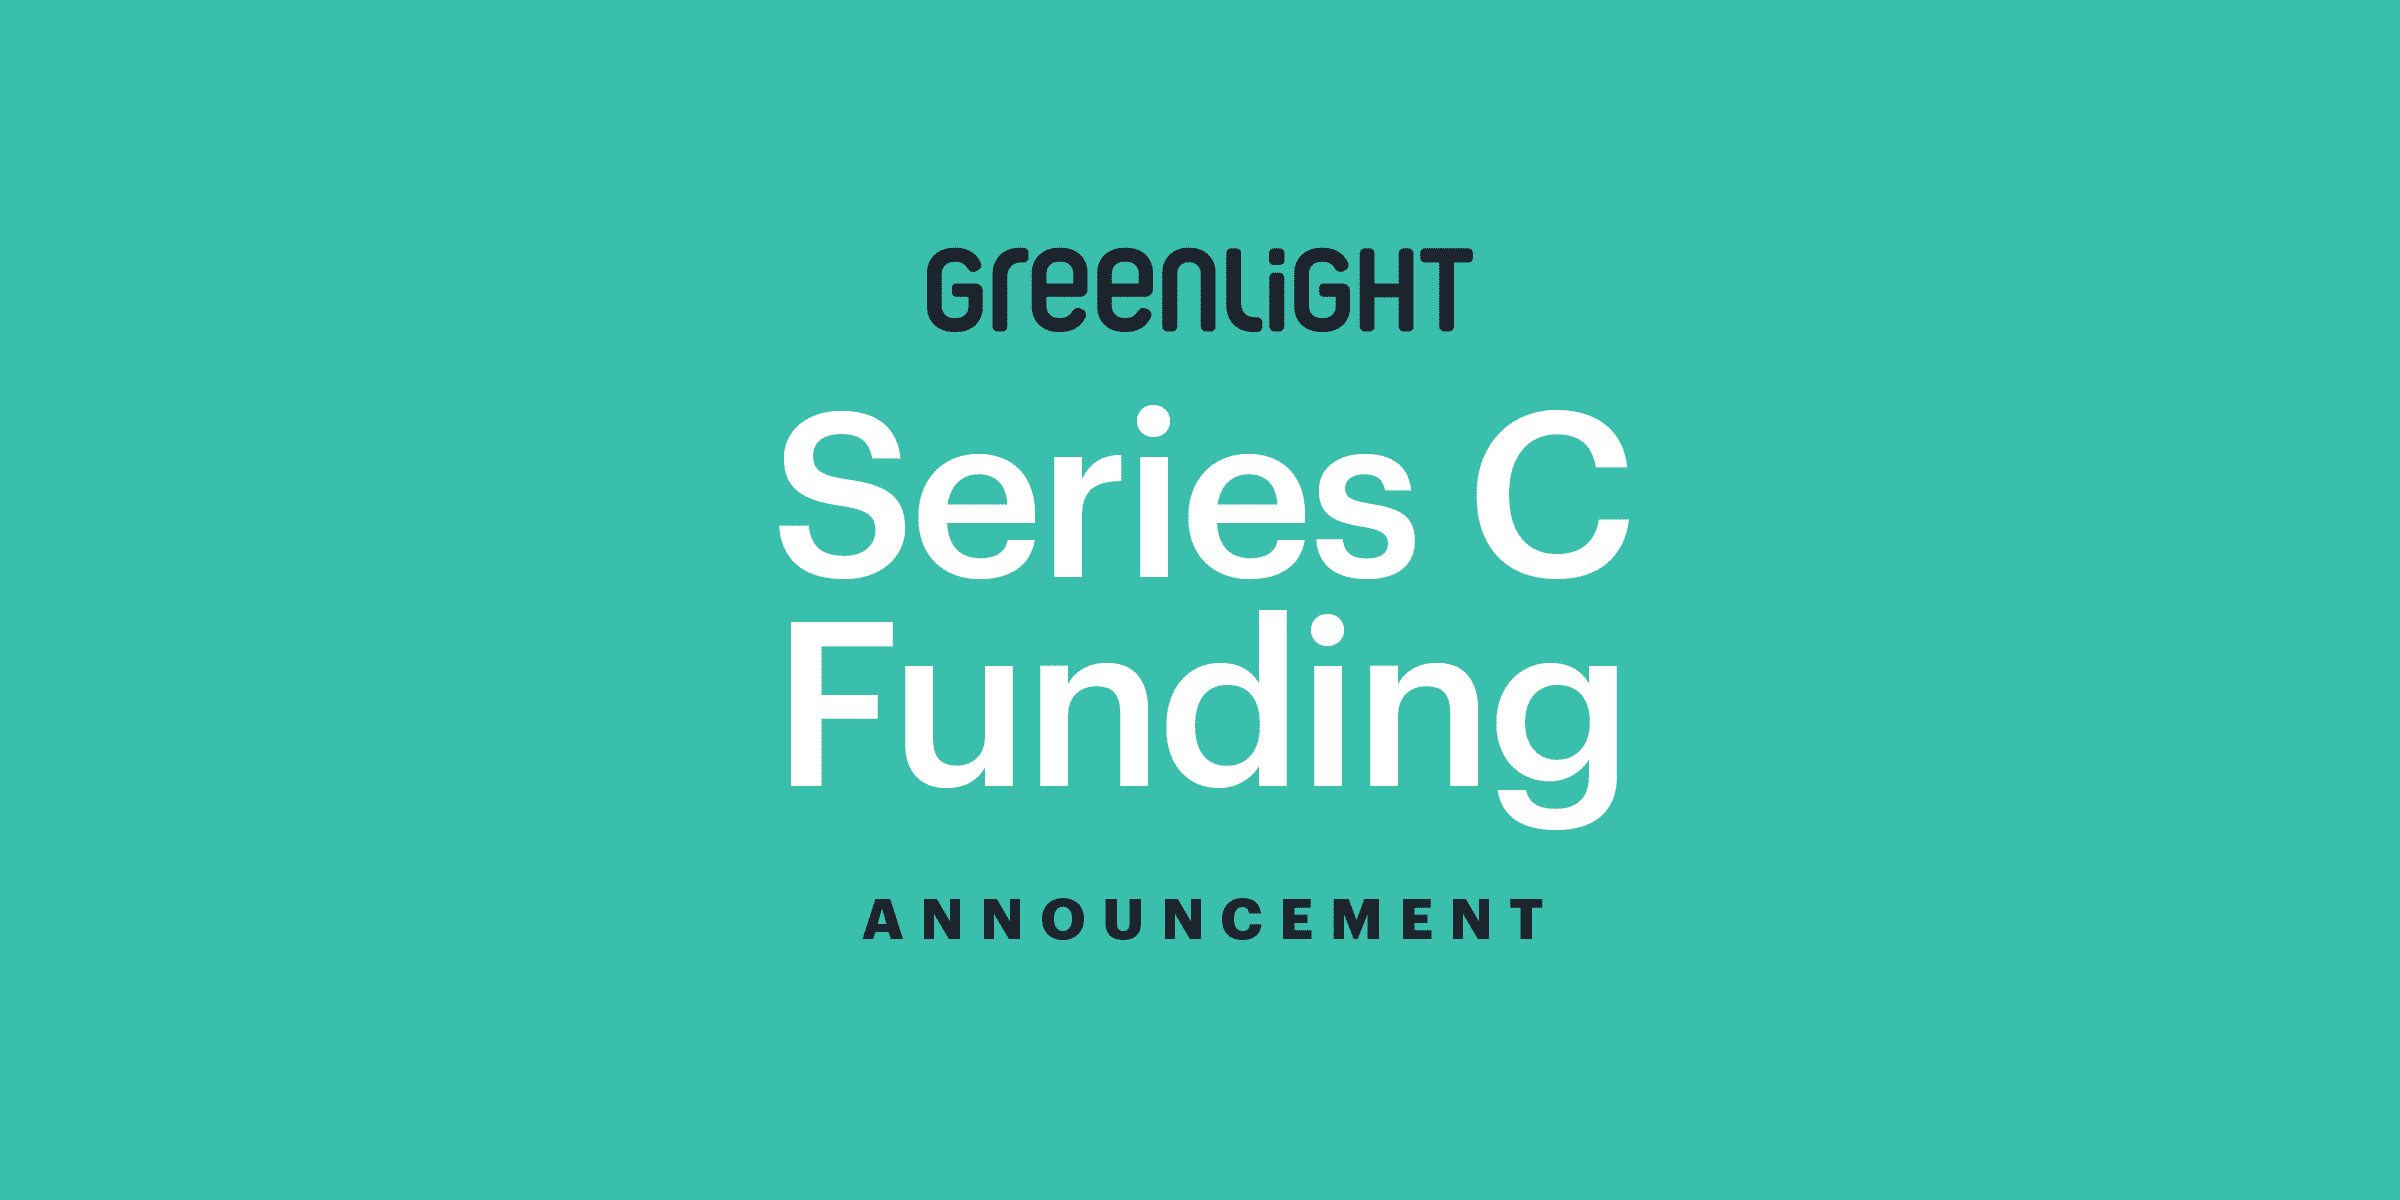 greenlight series c funding announcement